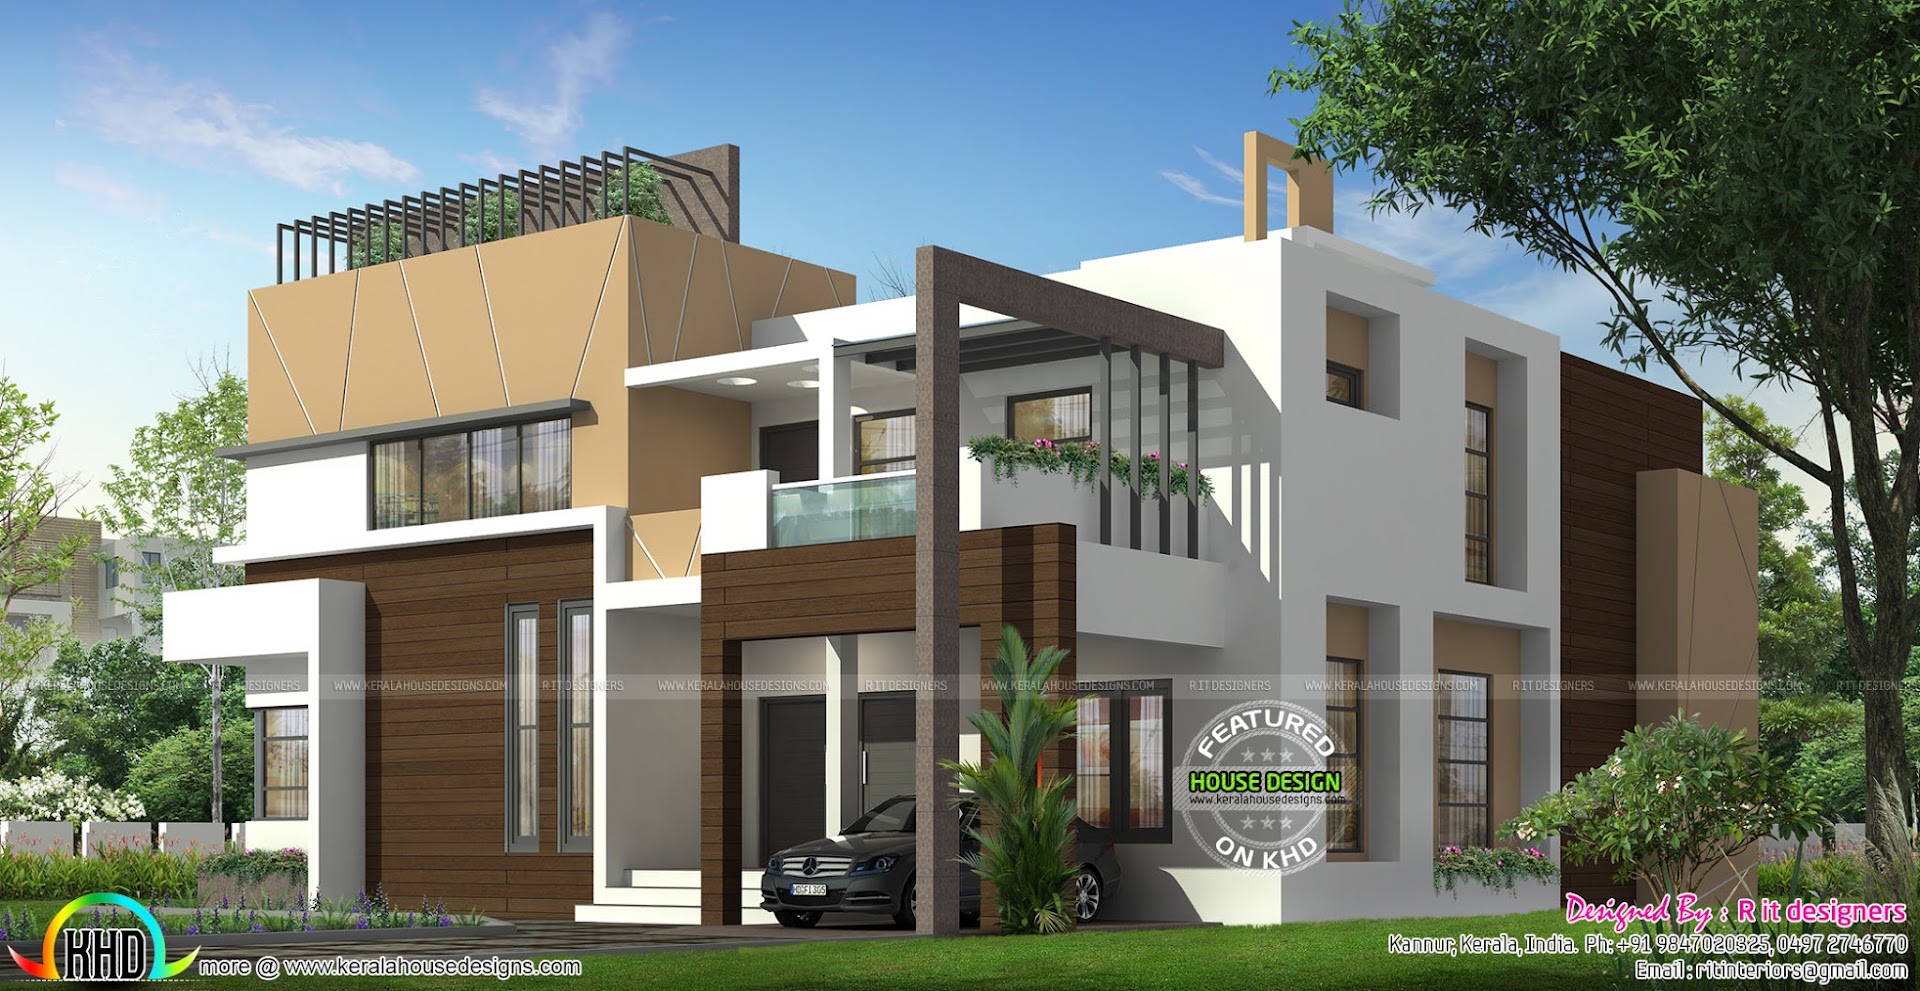 Luxurious 5  bedroom  ultra modern  home  Kerala home  design 